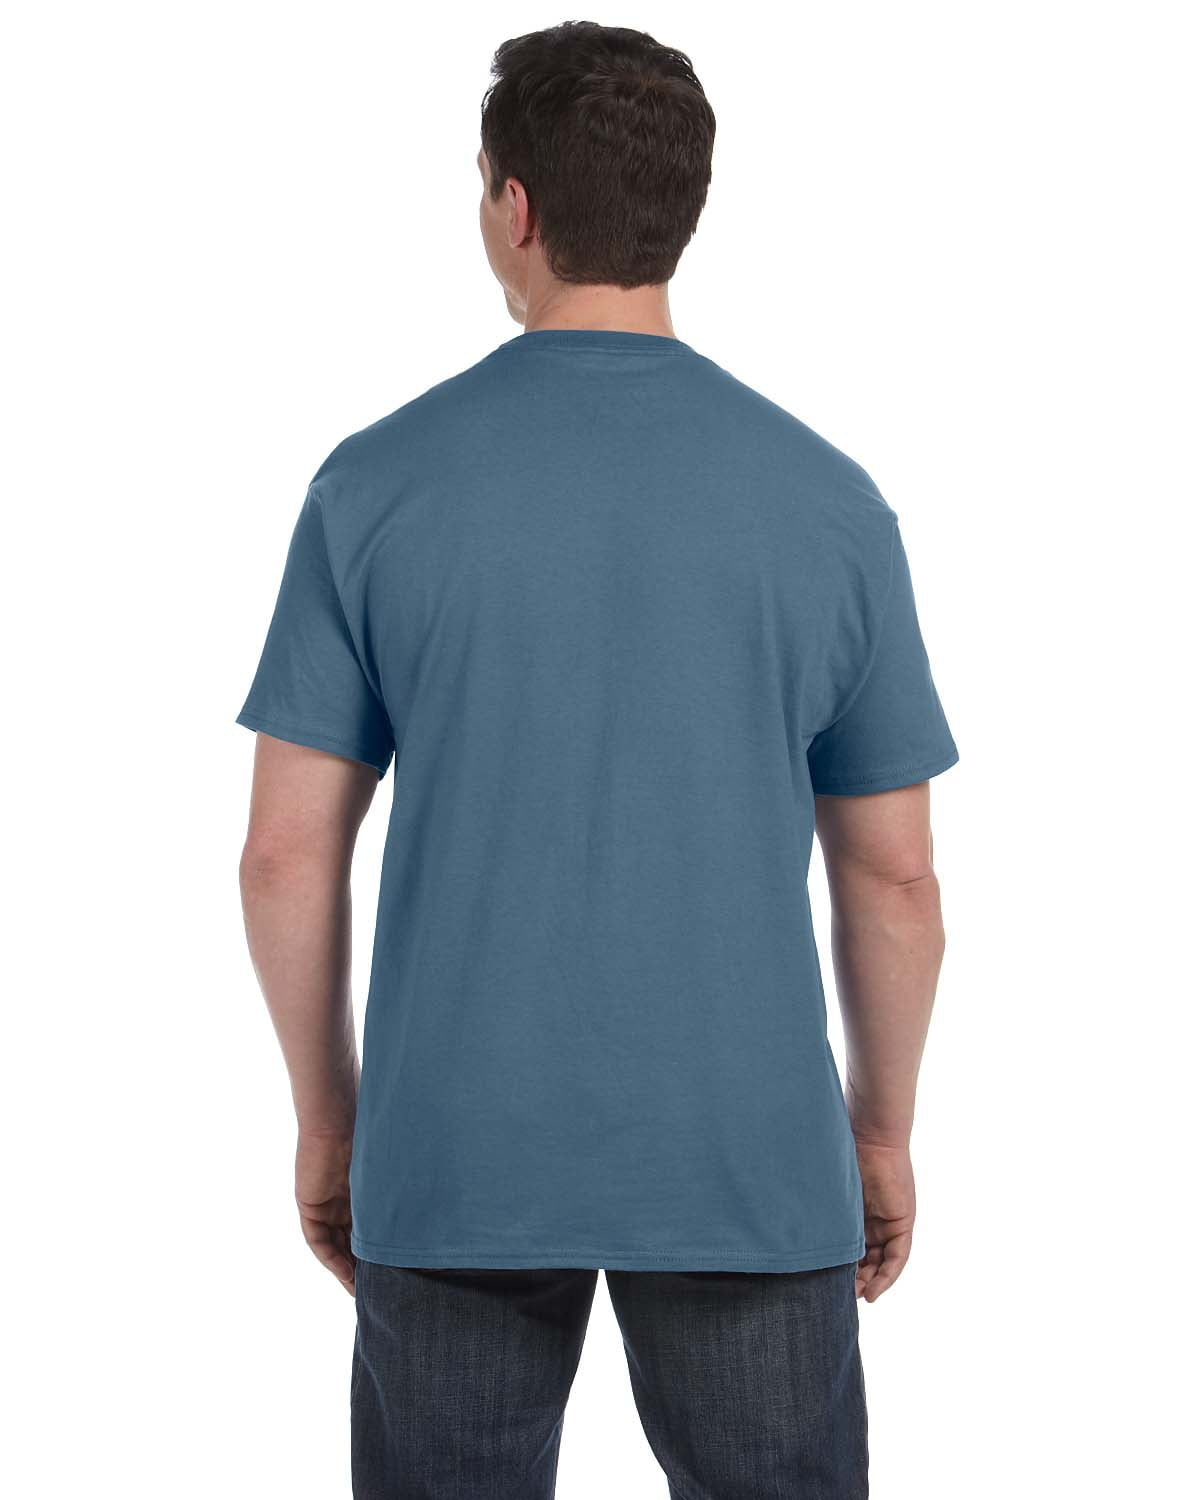 Hanes 6.1 oz H5590 2XL Deep Forest Tagless Pocket T-Shirt